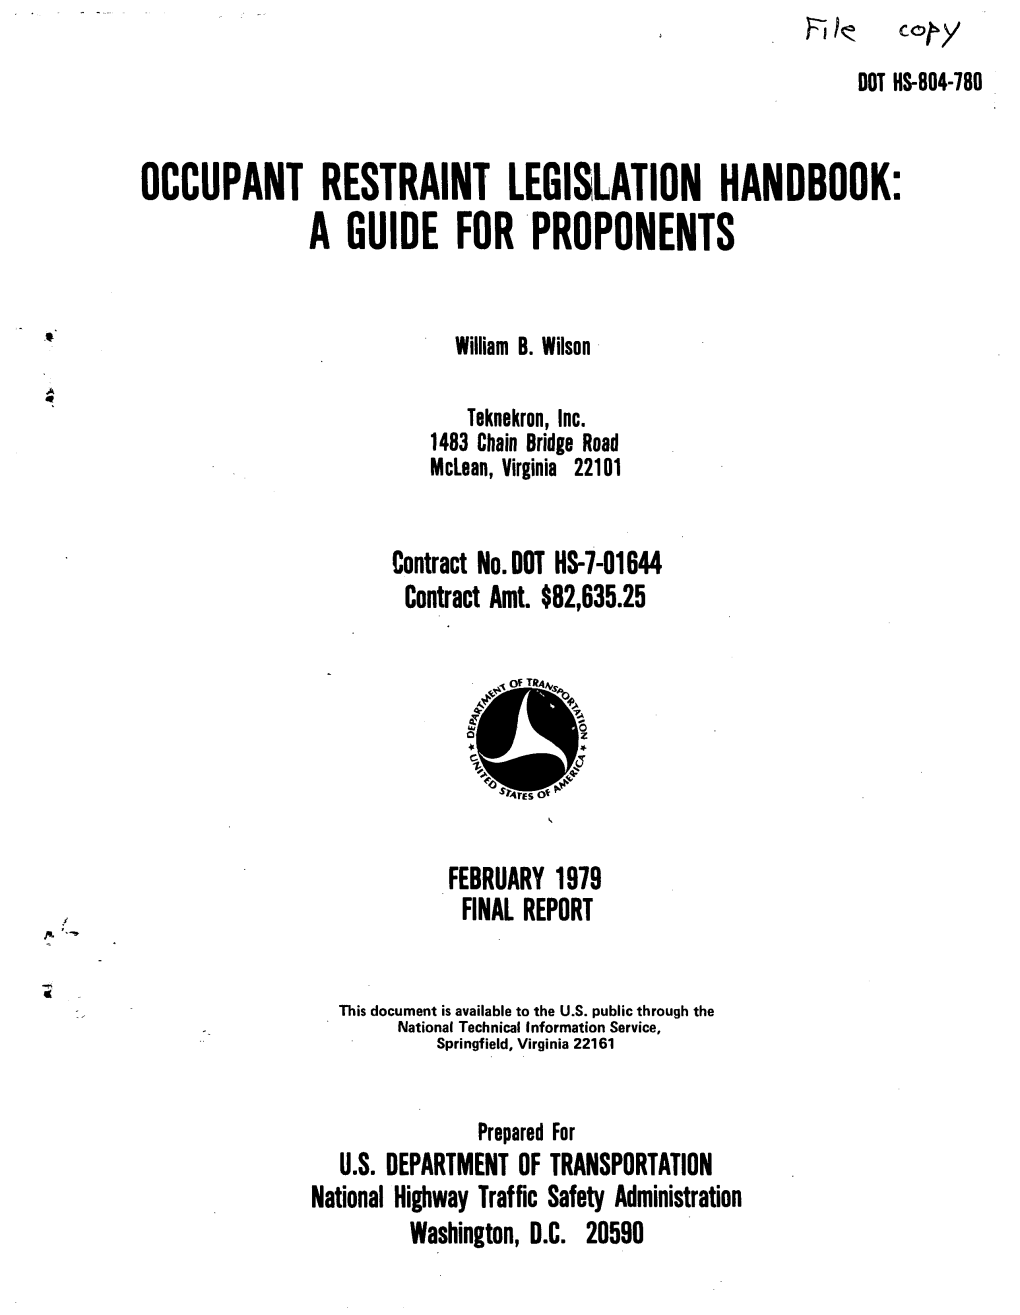 Occupant Restraint Legislation Handbook: a Guide for Proponents